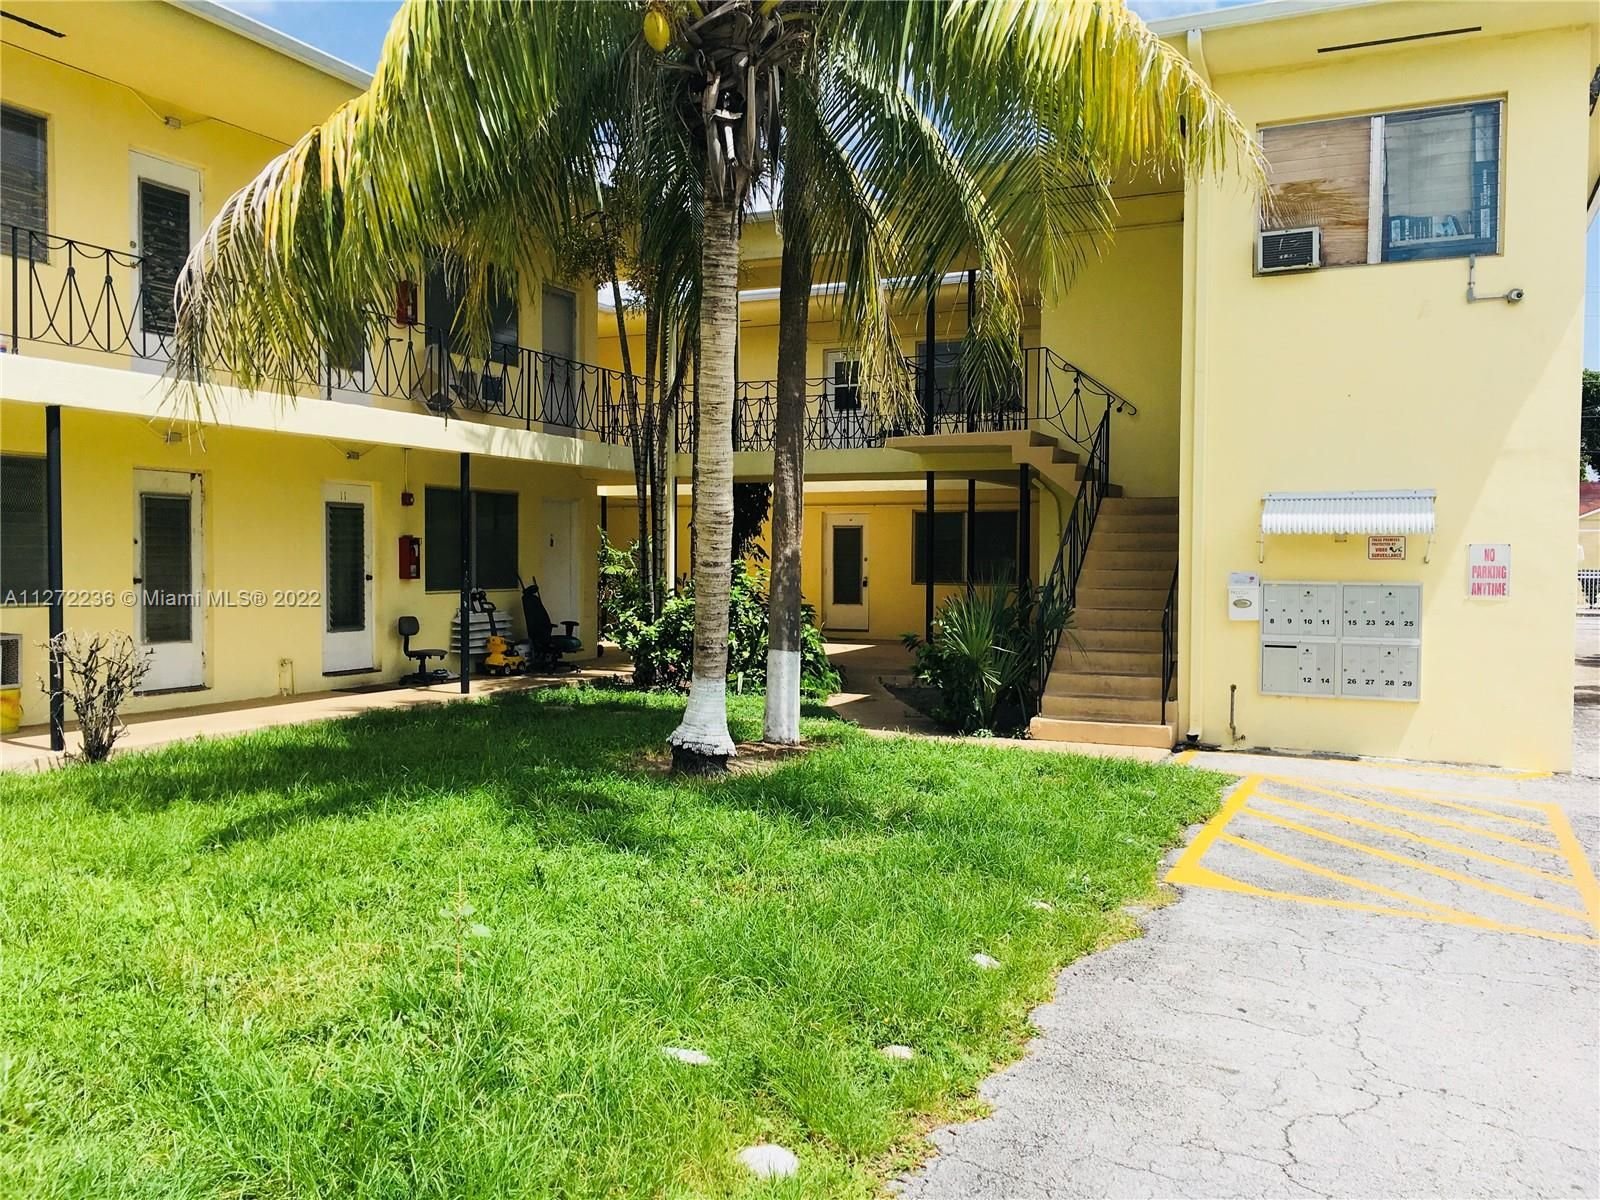 Real estate property located at 71 76th St #6, Miami-Dade County, Miami, FL